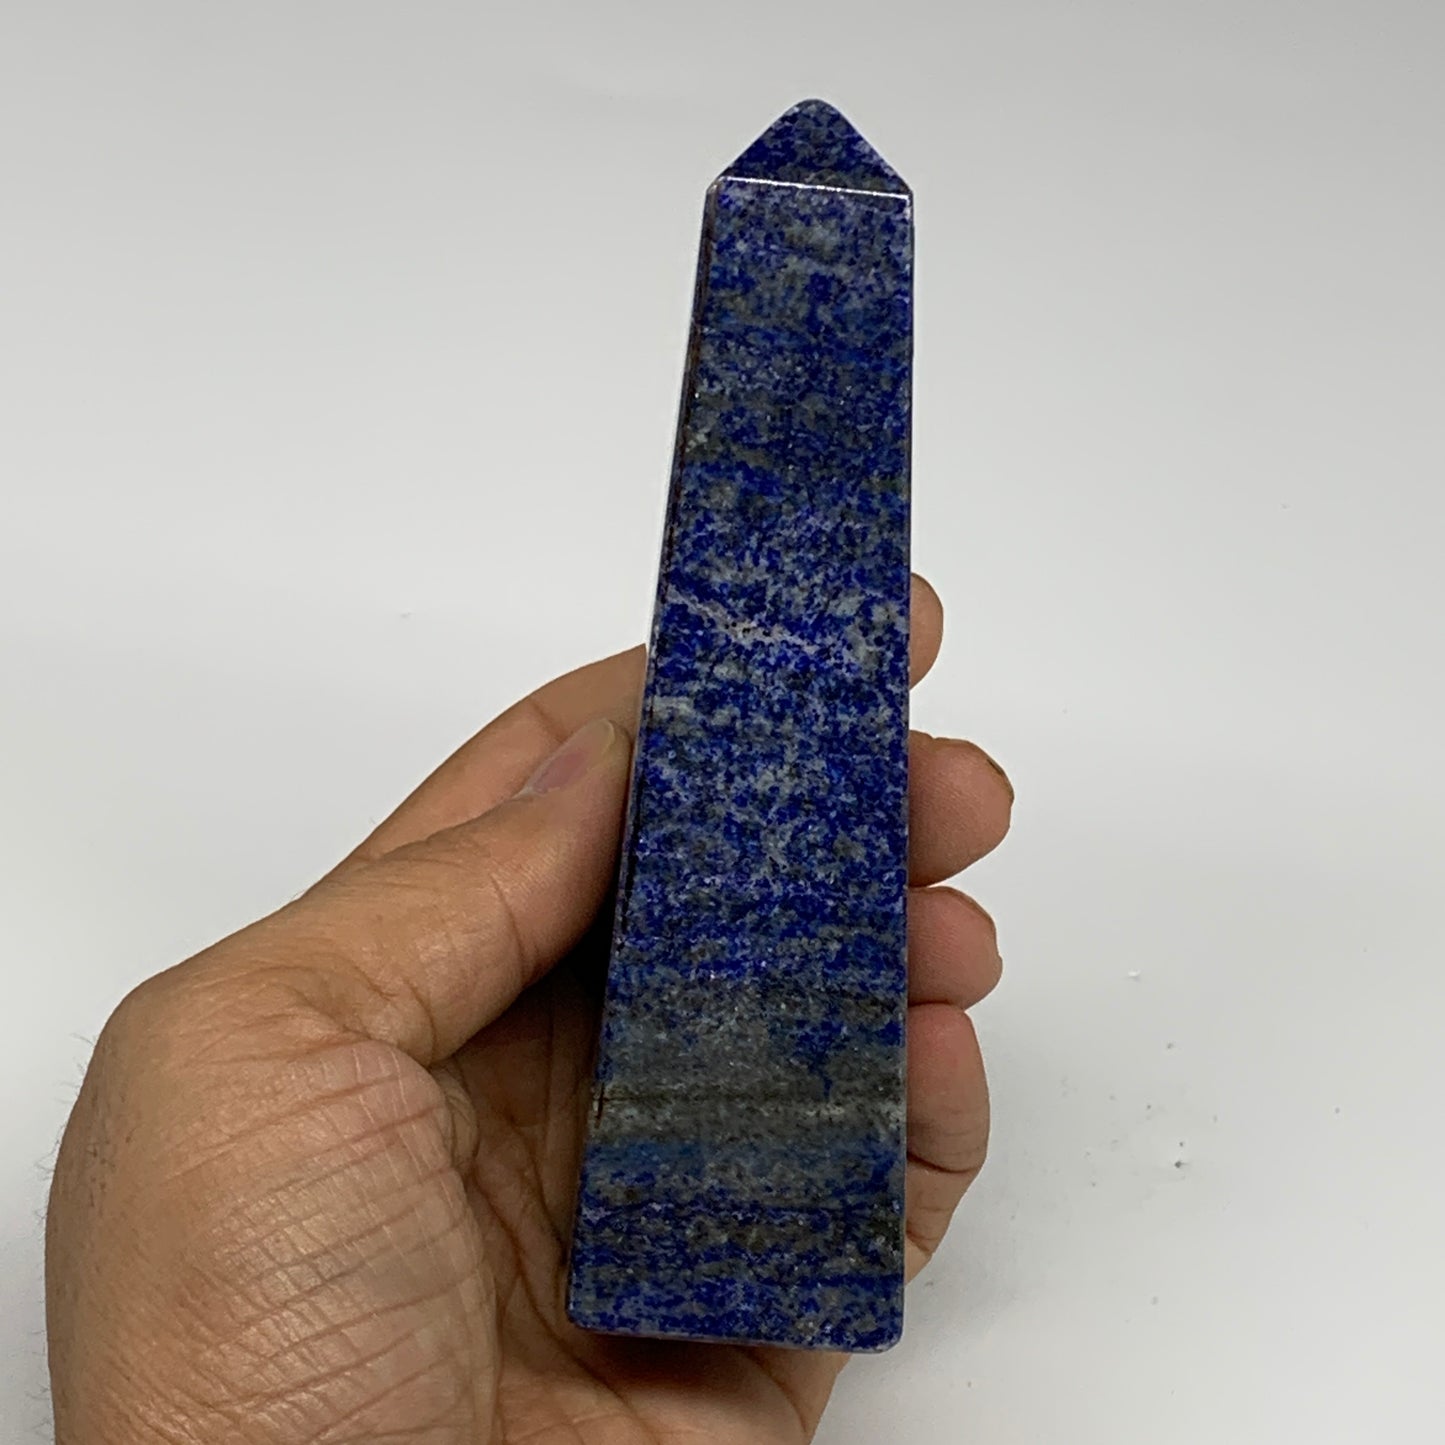 267.4g, 4.8"x1.3"x1.3", Natural Lapis Lazuli Tower Point Obelisk Afghanistan,B30